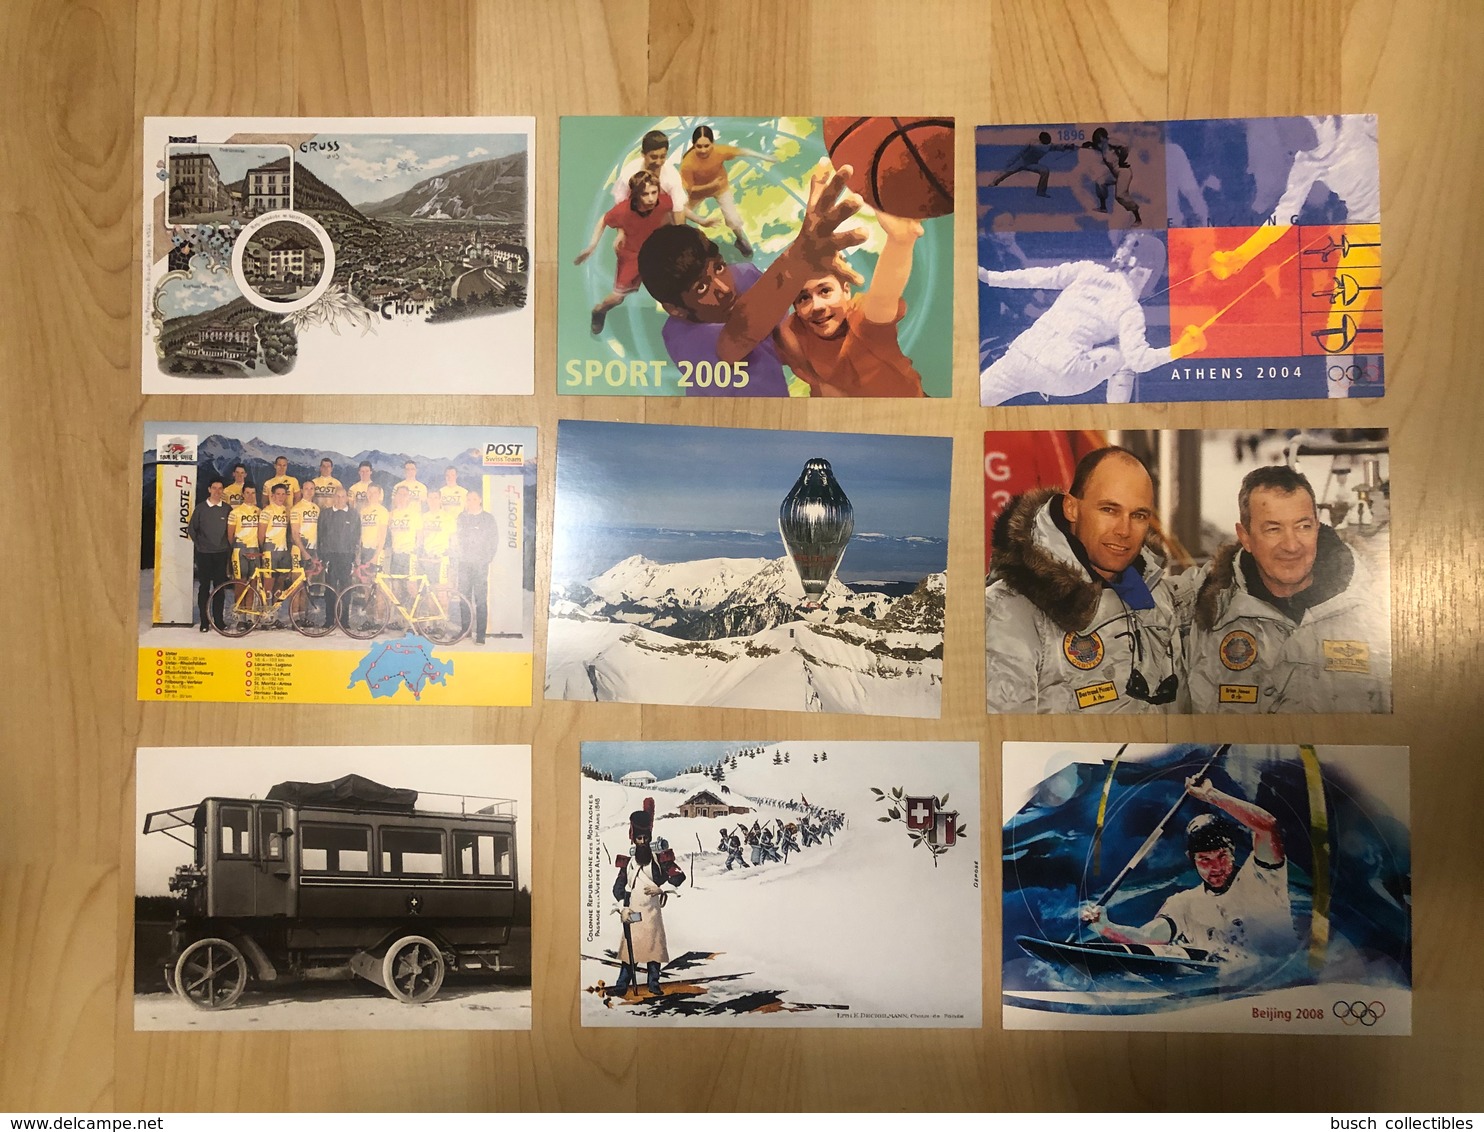 Suisse Schweiz Switzerland 91 entiers postaux Ganzsachen Stationneries Tintin Olympic Games Space Journée du timbre